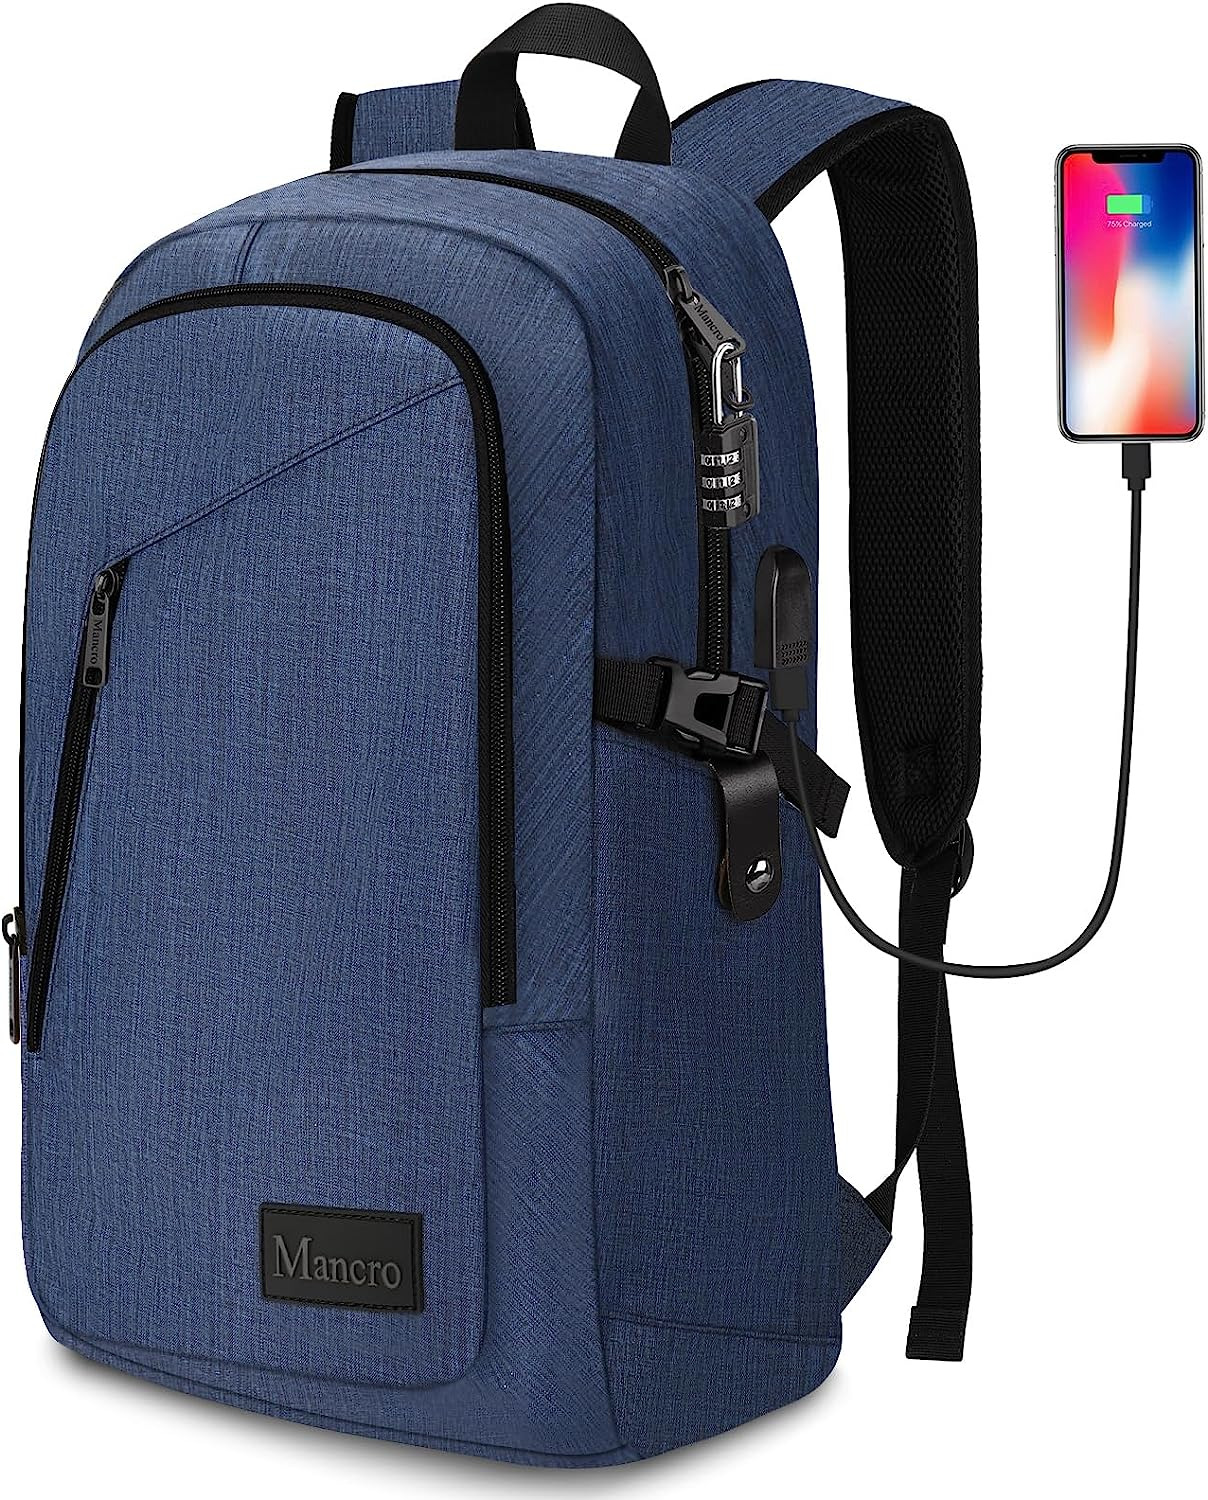 Laptop Backpack 17 Inch Computer Notebook Bag Business Travel School New Pocket